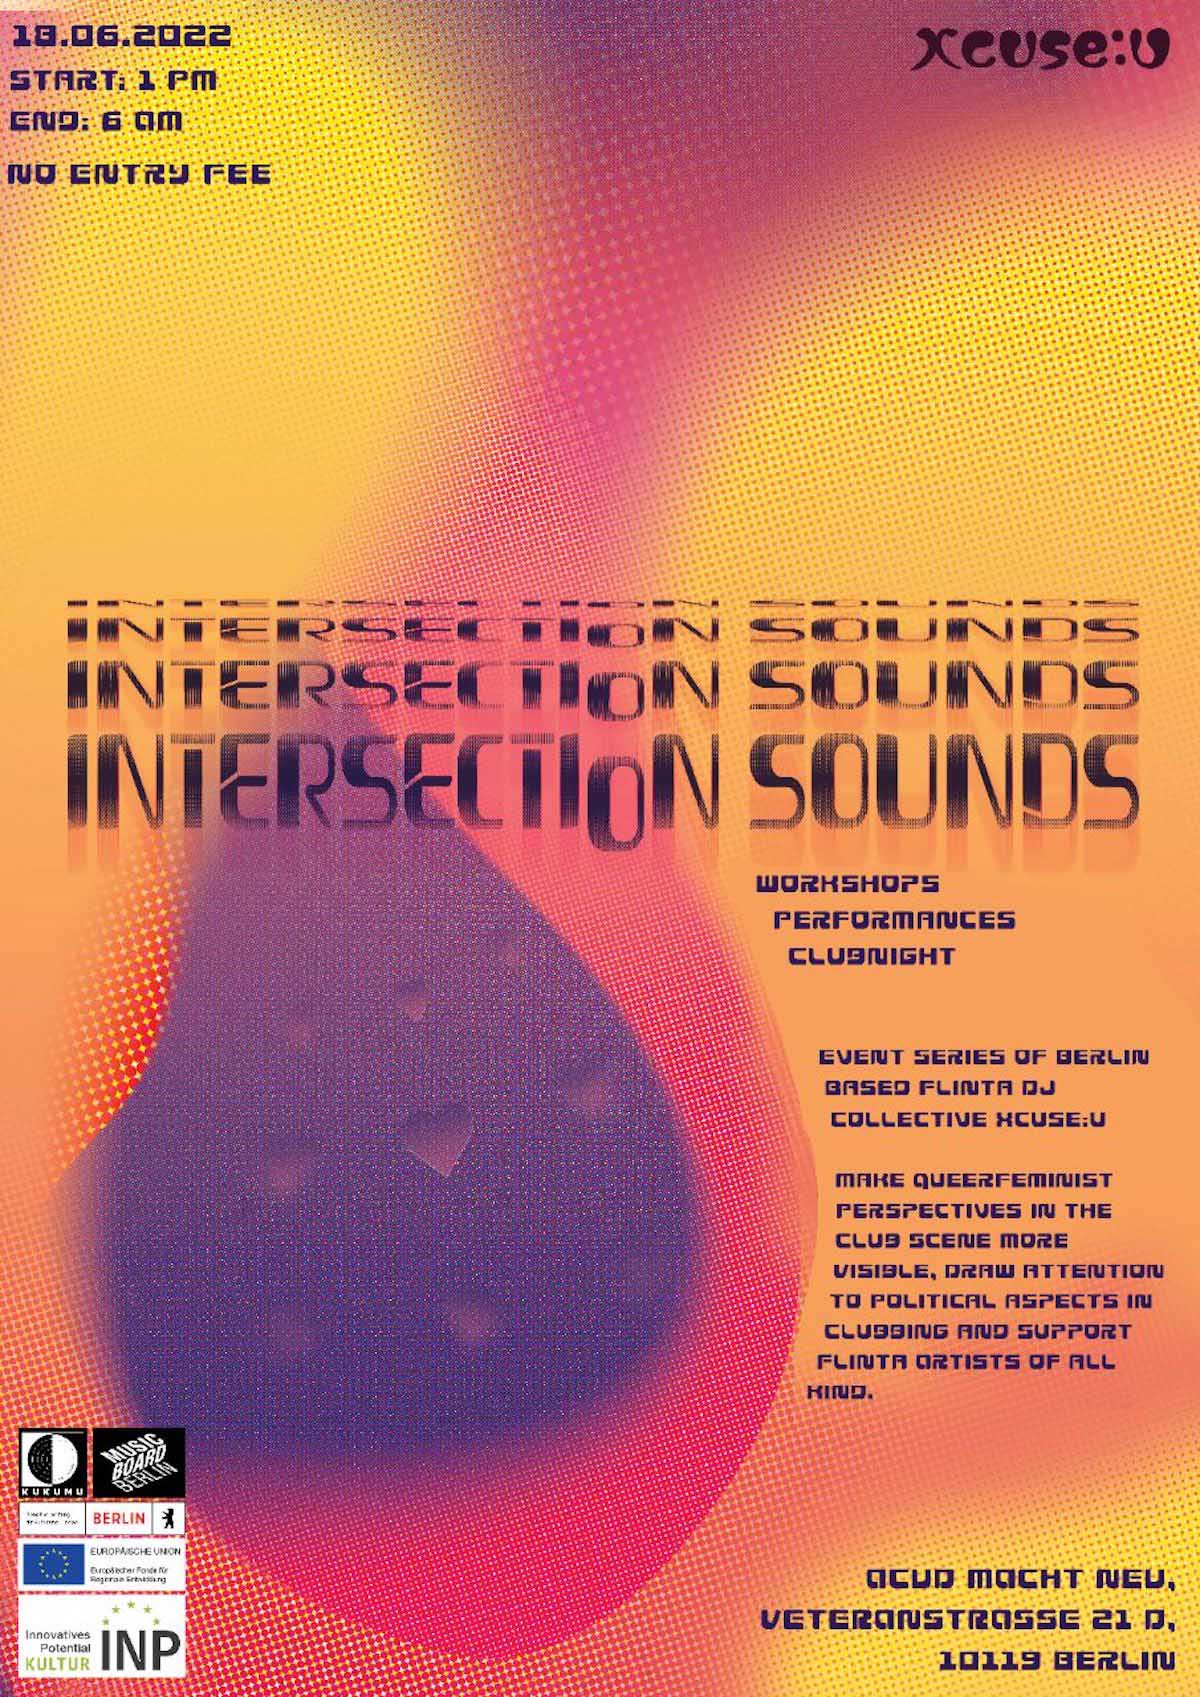 Pop-Kultur Lokal "Intersection sounds" poster